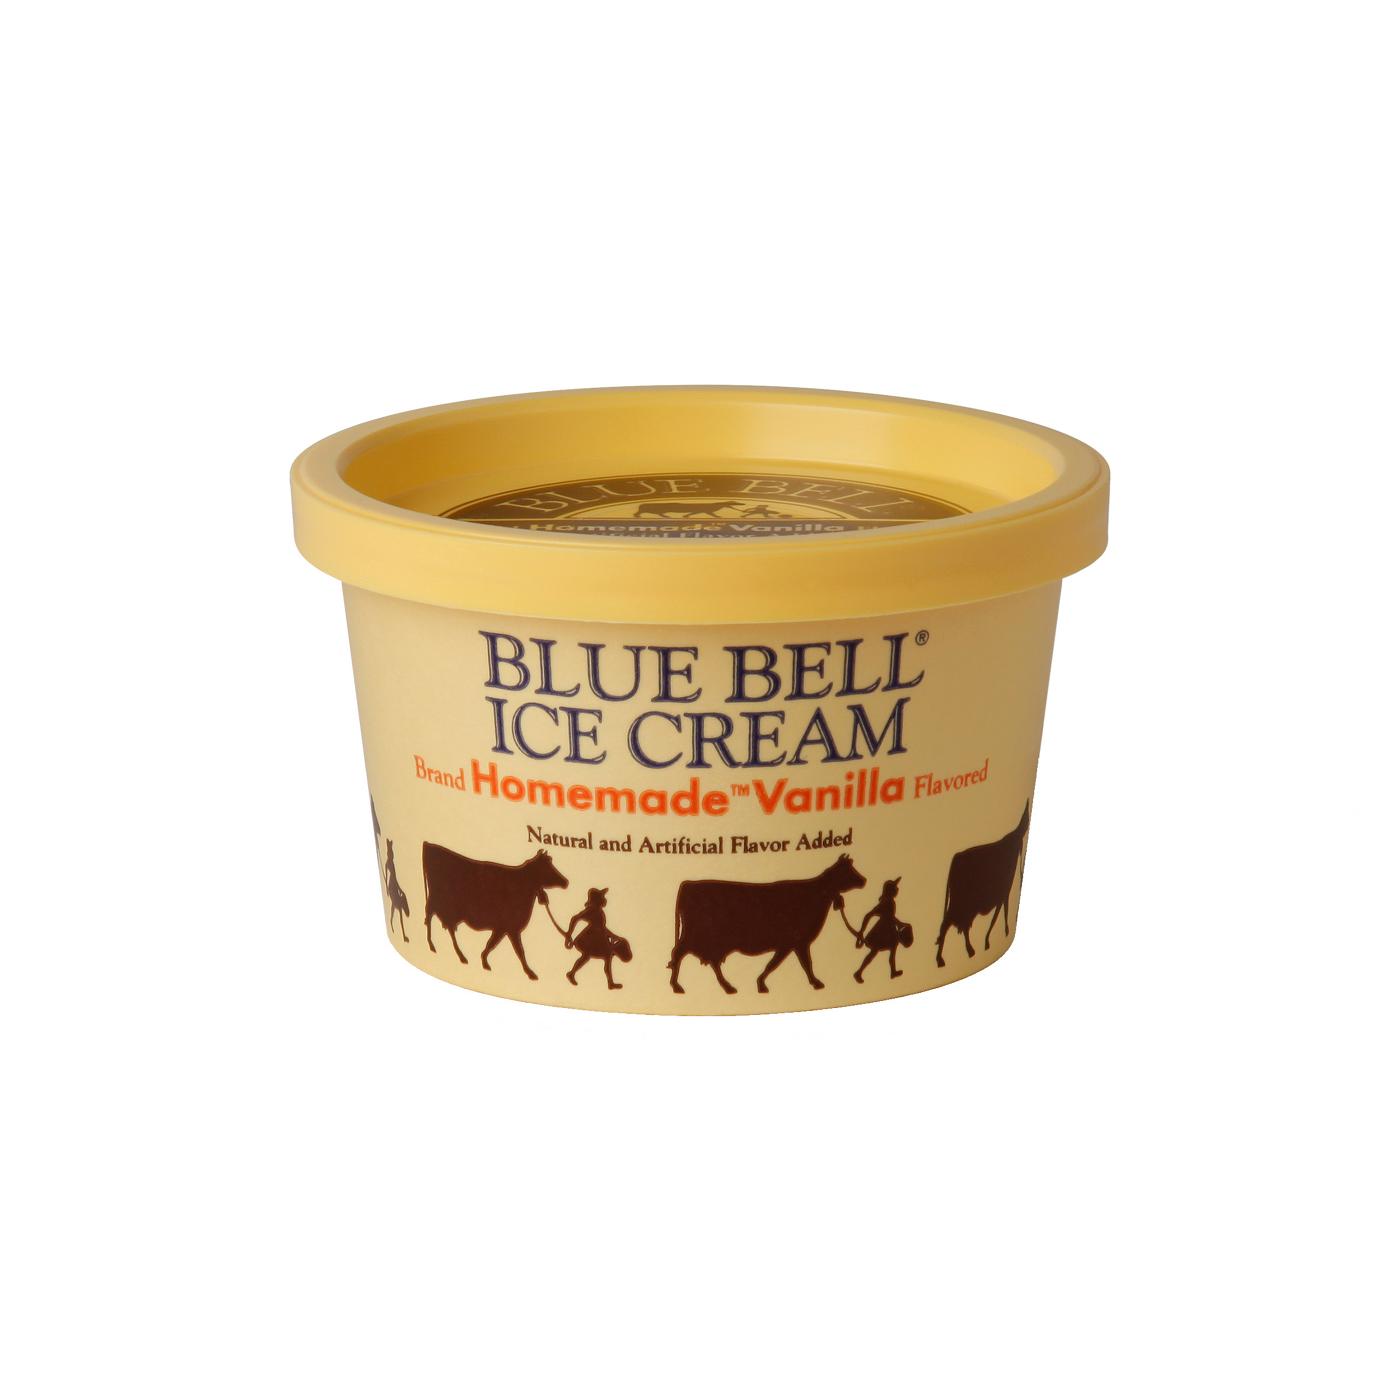 Blue Bell Birthday Cake Ice Cream Cups - Shop Ice Cream at H-E-B